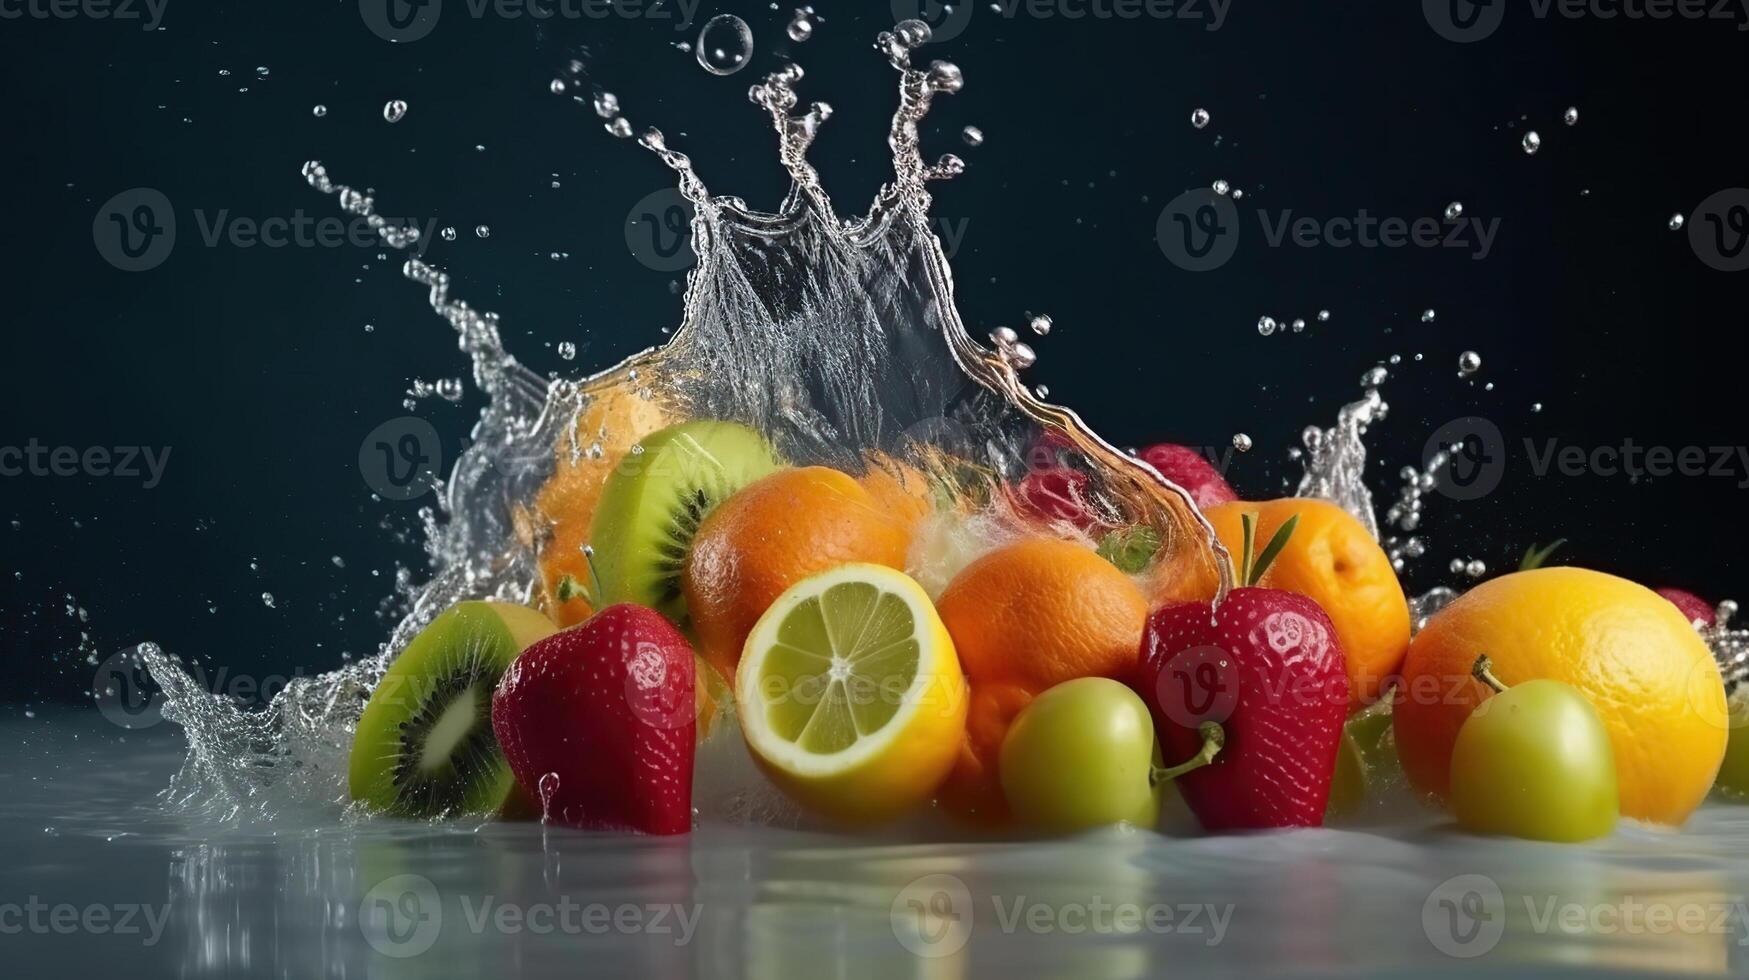 Splashing fruit on water. Fresh Fruit and Vegetables being shot as they submerged under water. Illustration of Washing fruits, photo